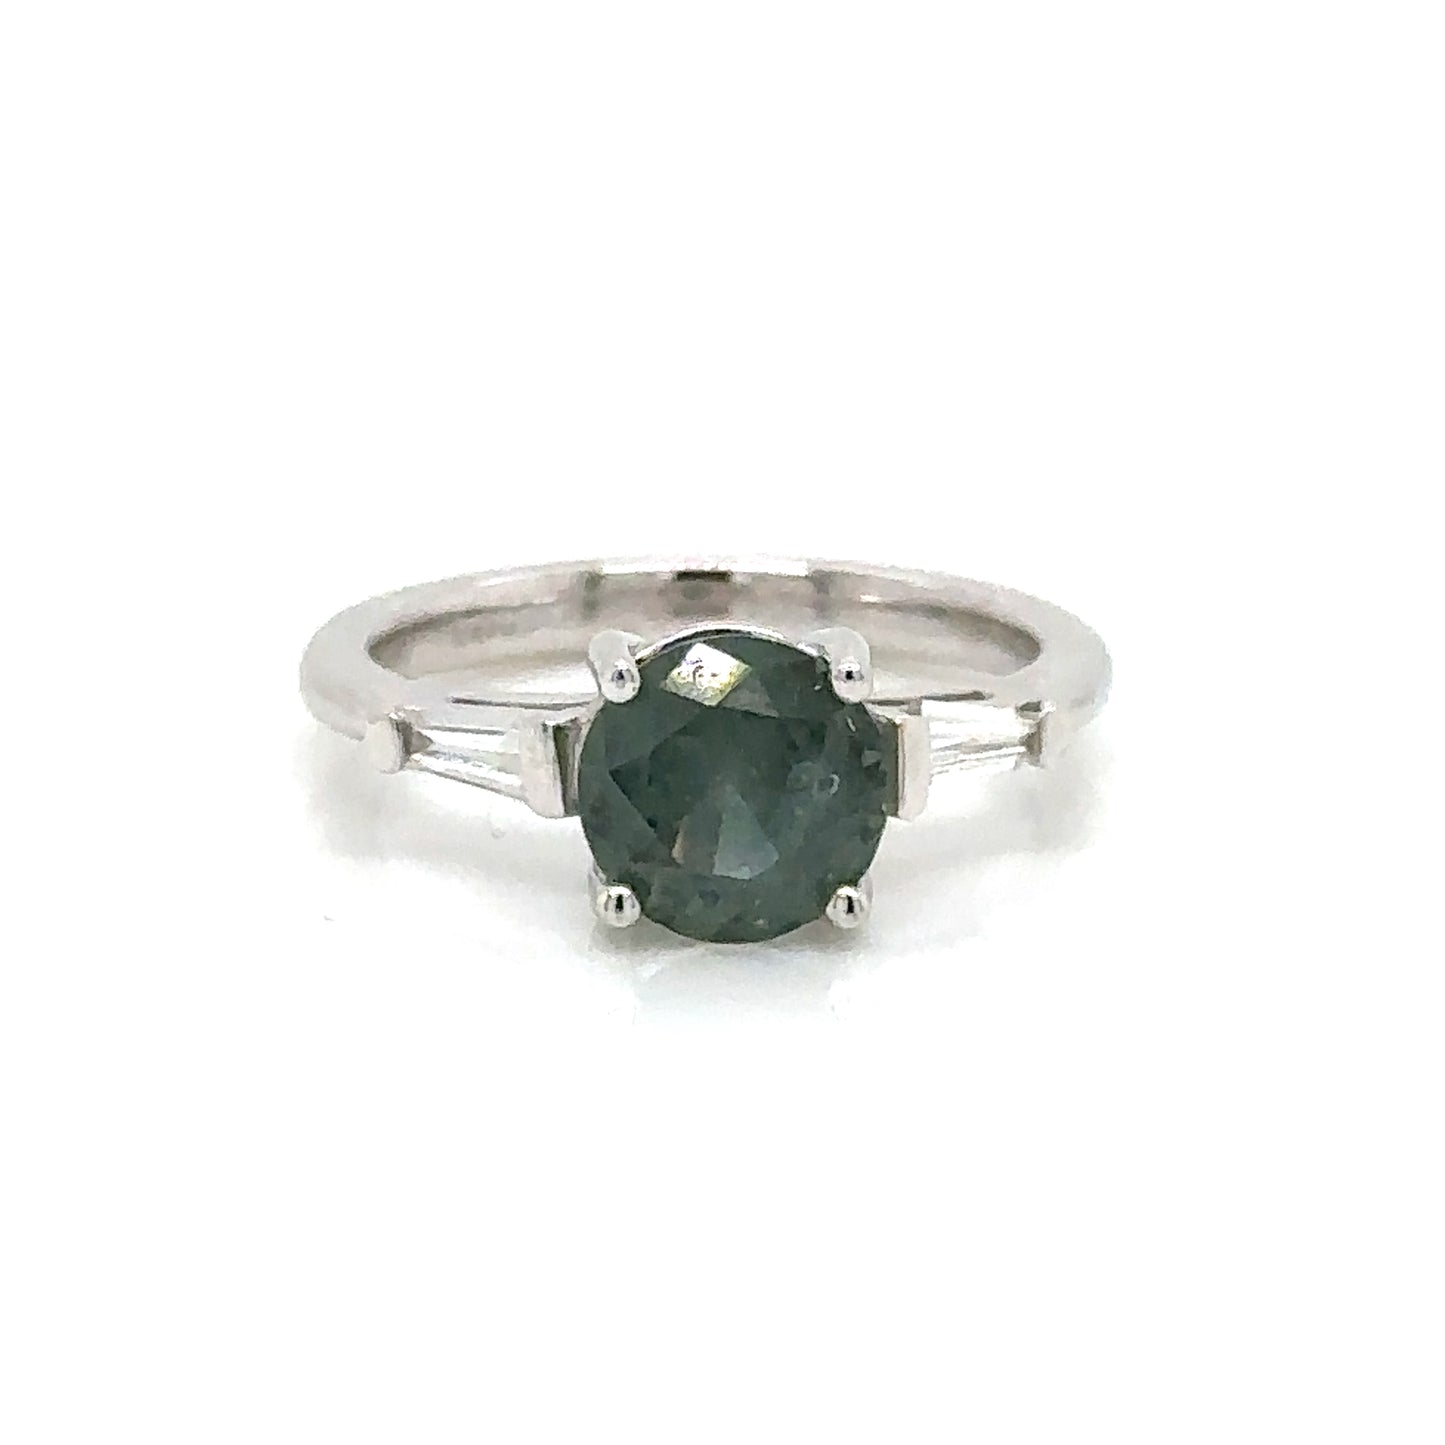 IMMEDIATE DELIVERY / SINGLE PIECE / Brilliant Cut Opalescent Sapphire Ring in Greenish Blue Tone with Bagette Diamonds / 14k White Gold / Size 5